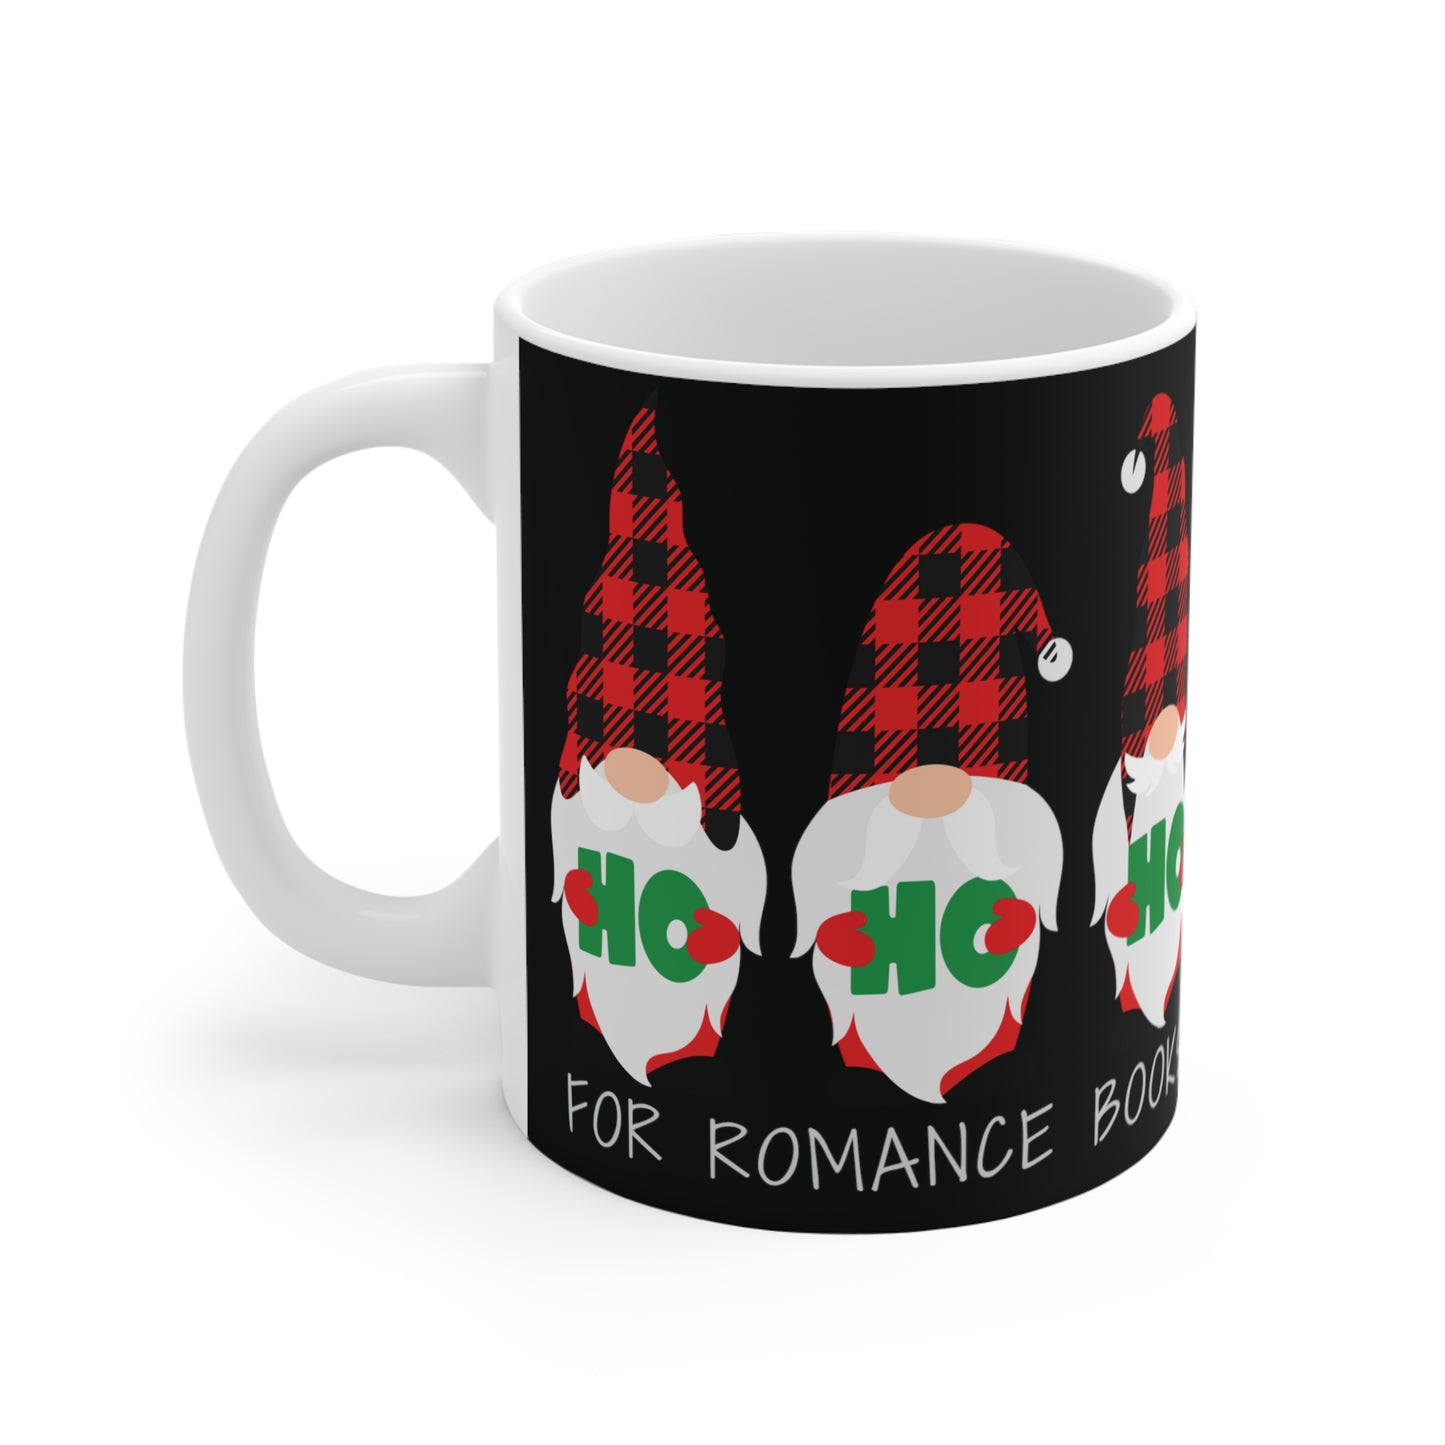 HO HO HO For Romance Books Mug 11oz